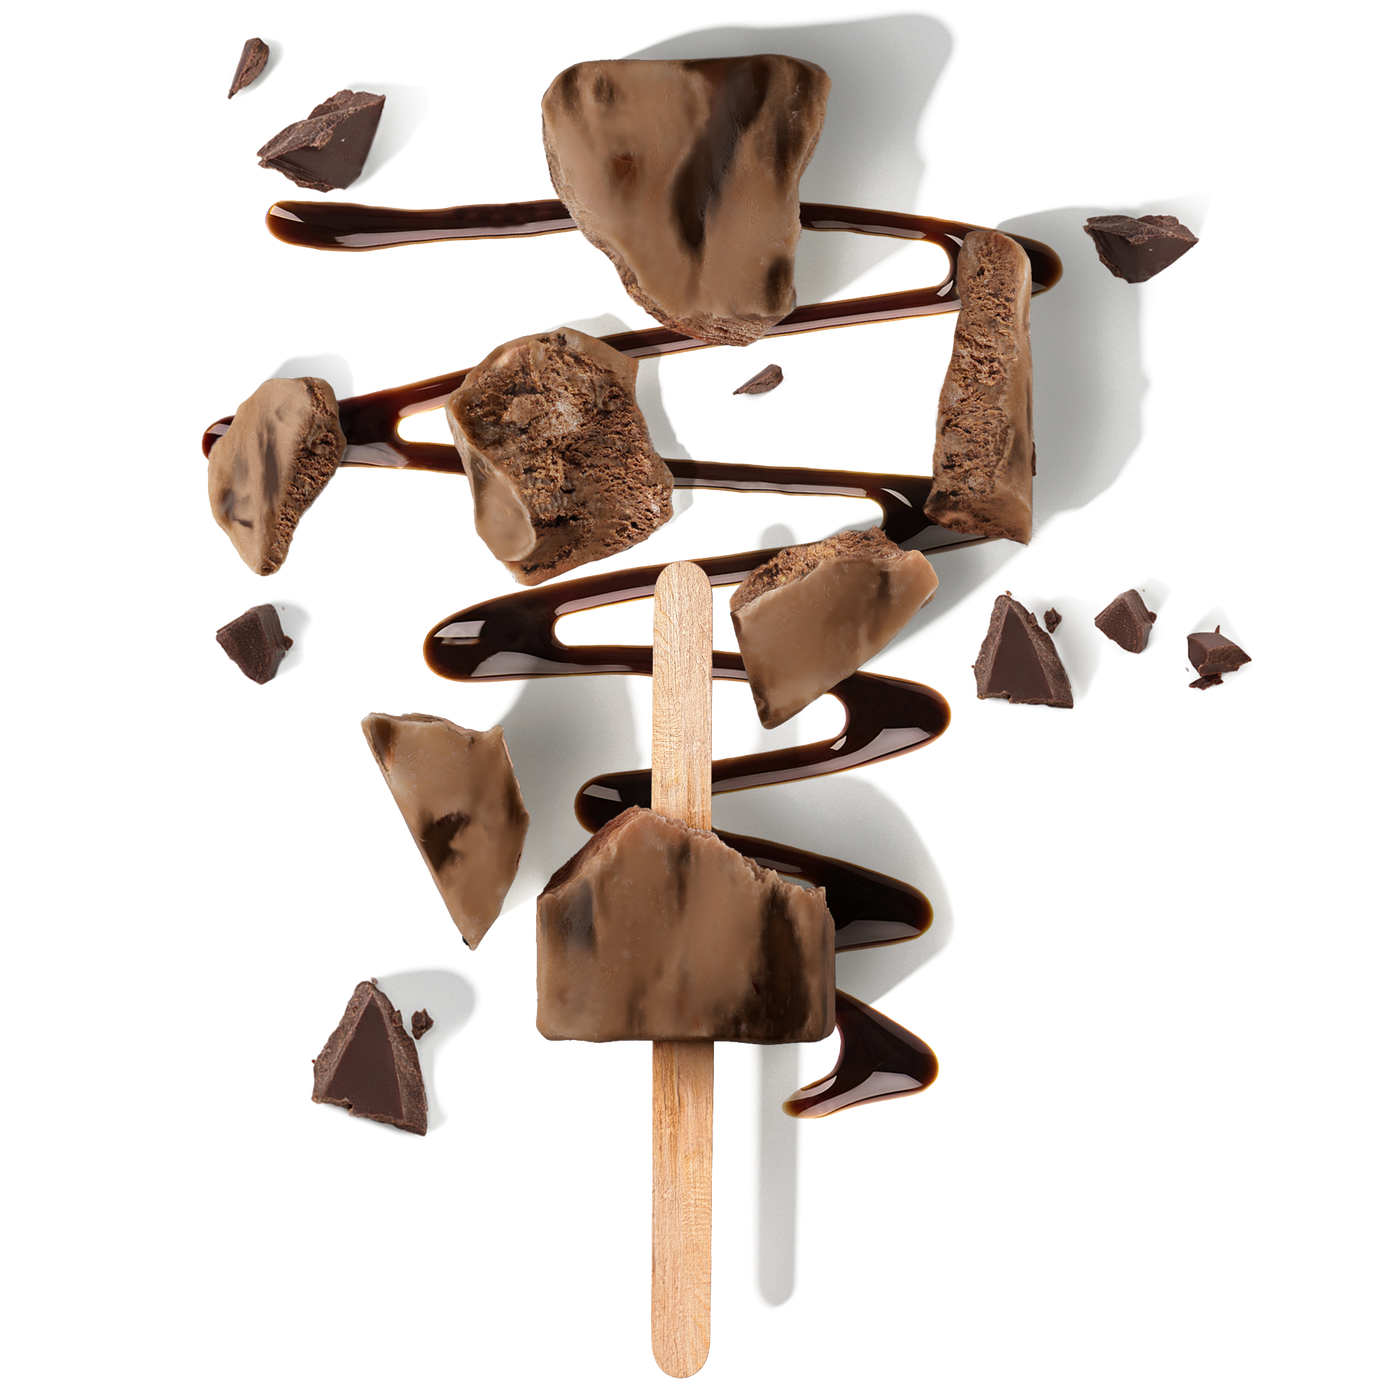 Zero Added Sugar Cream Bars - Chocolate Fudge